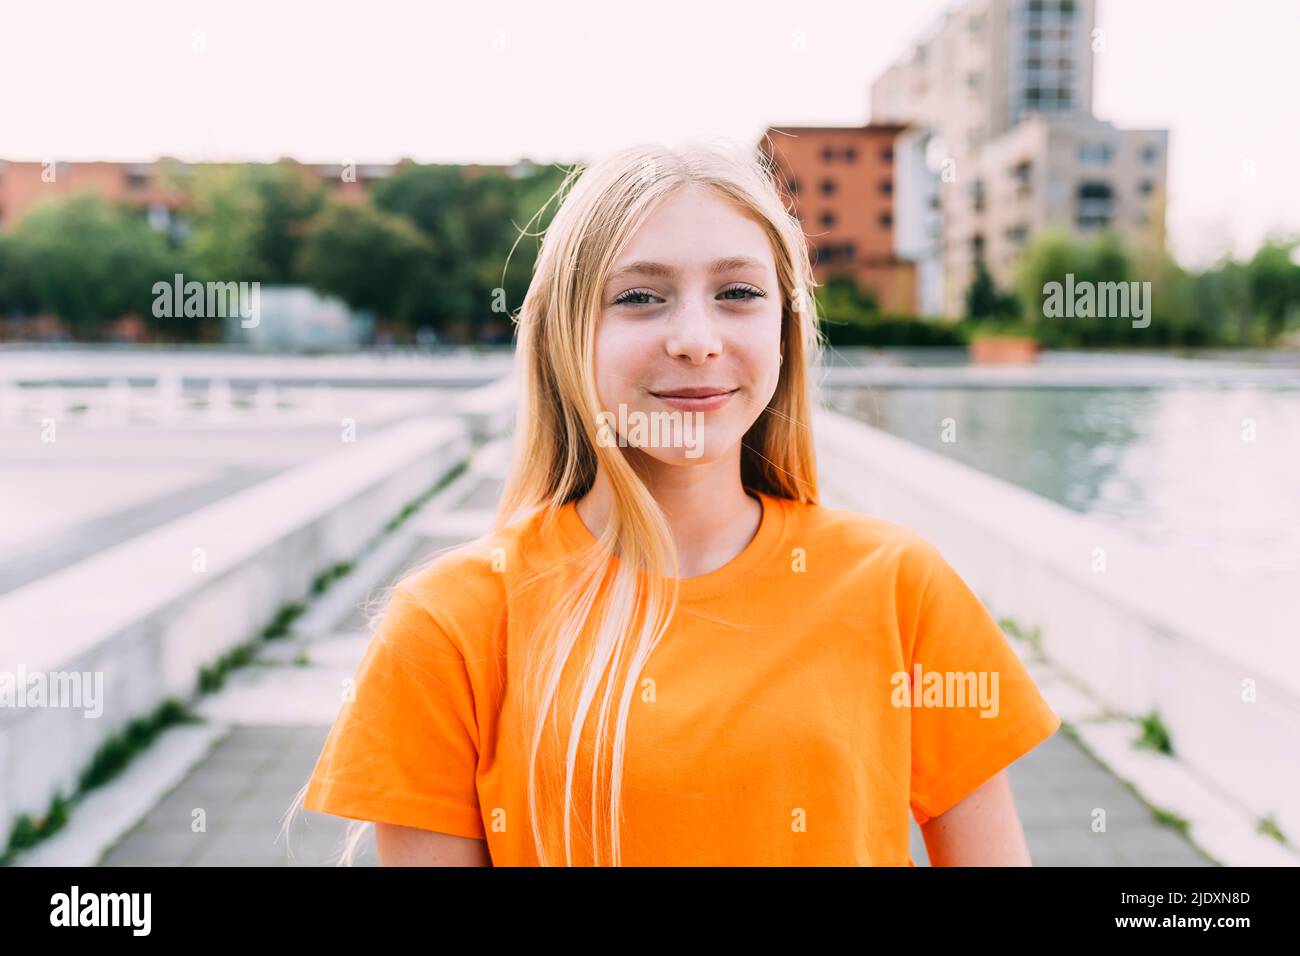 Happy girl with blond hair wearing orange t-shirt Stock Photo